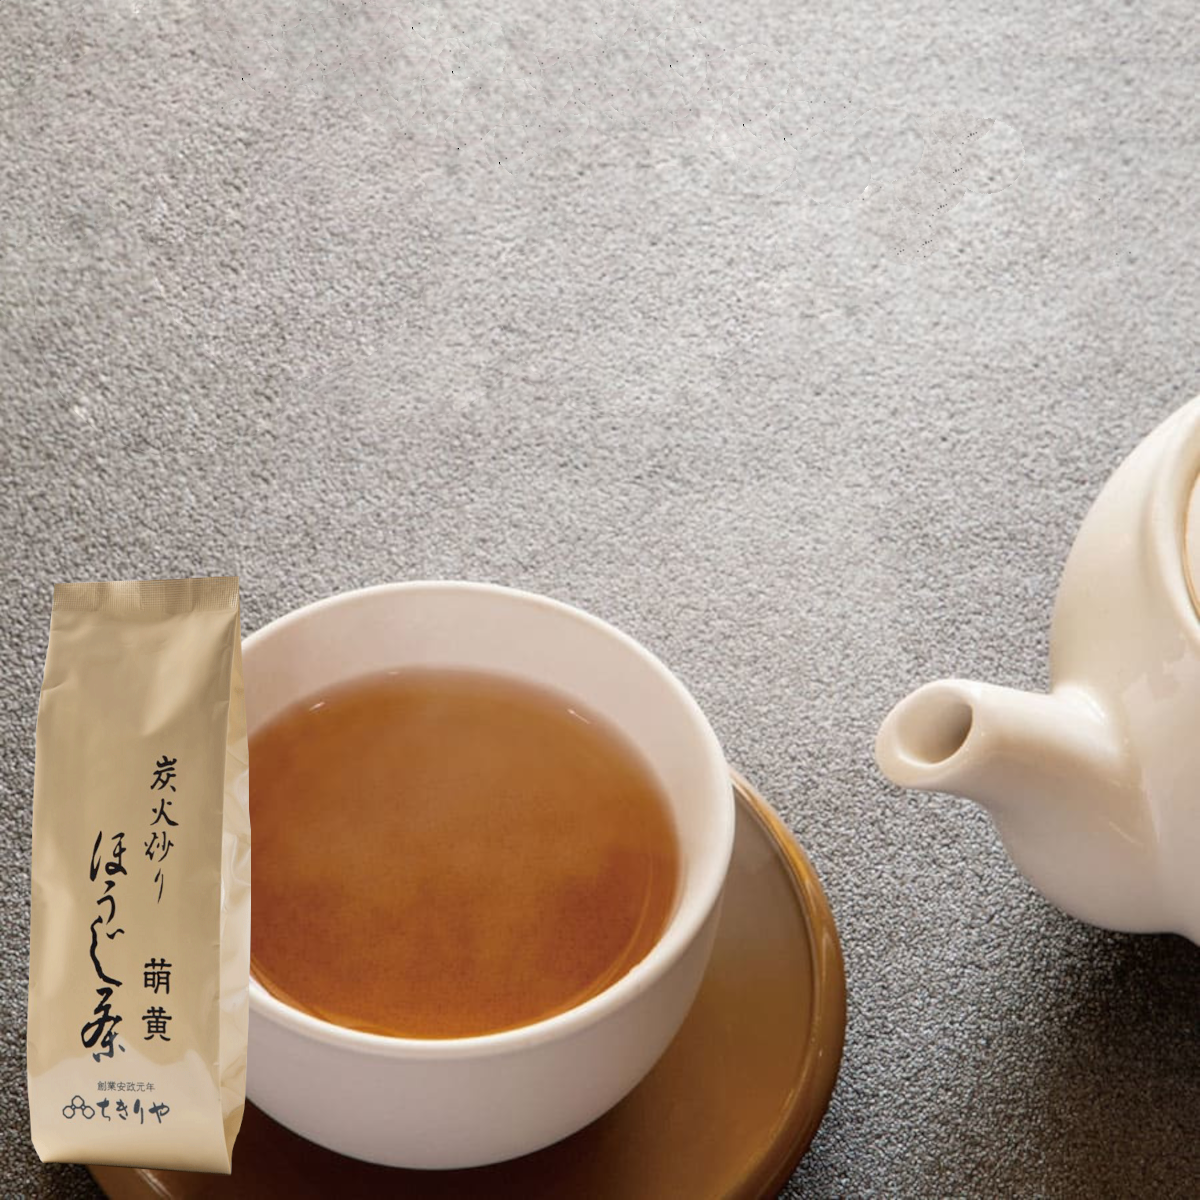 Charcoal Roasted Hojicha “Moegi” (roasted Japanese green tea) - 100g tea leaves